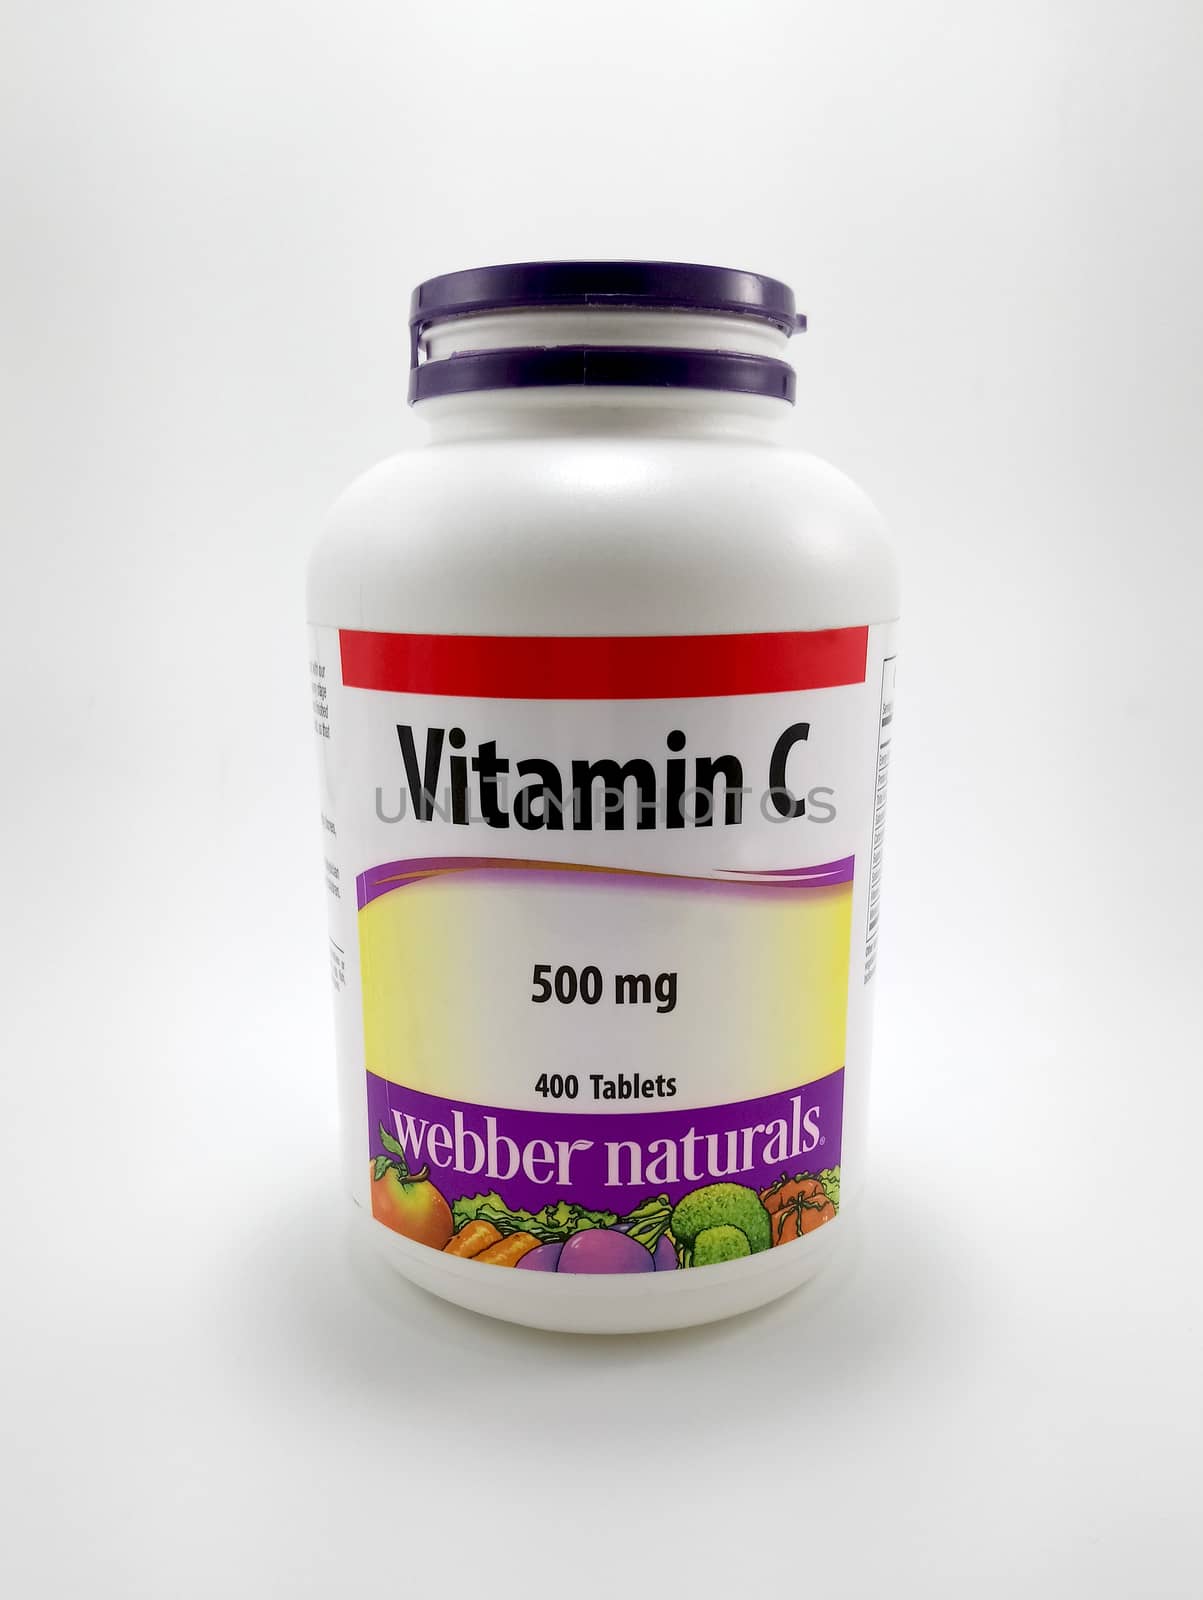 Webber naturals vitamin c bottle in Manila, Philippines by imwaltersy